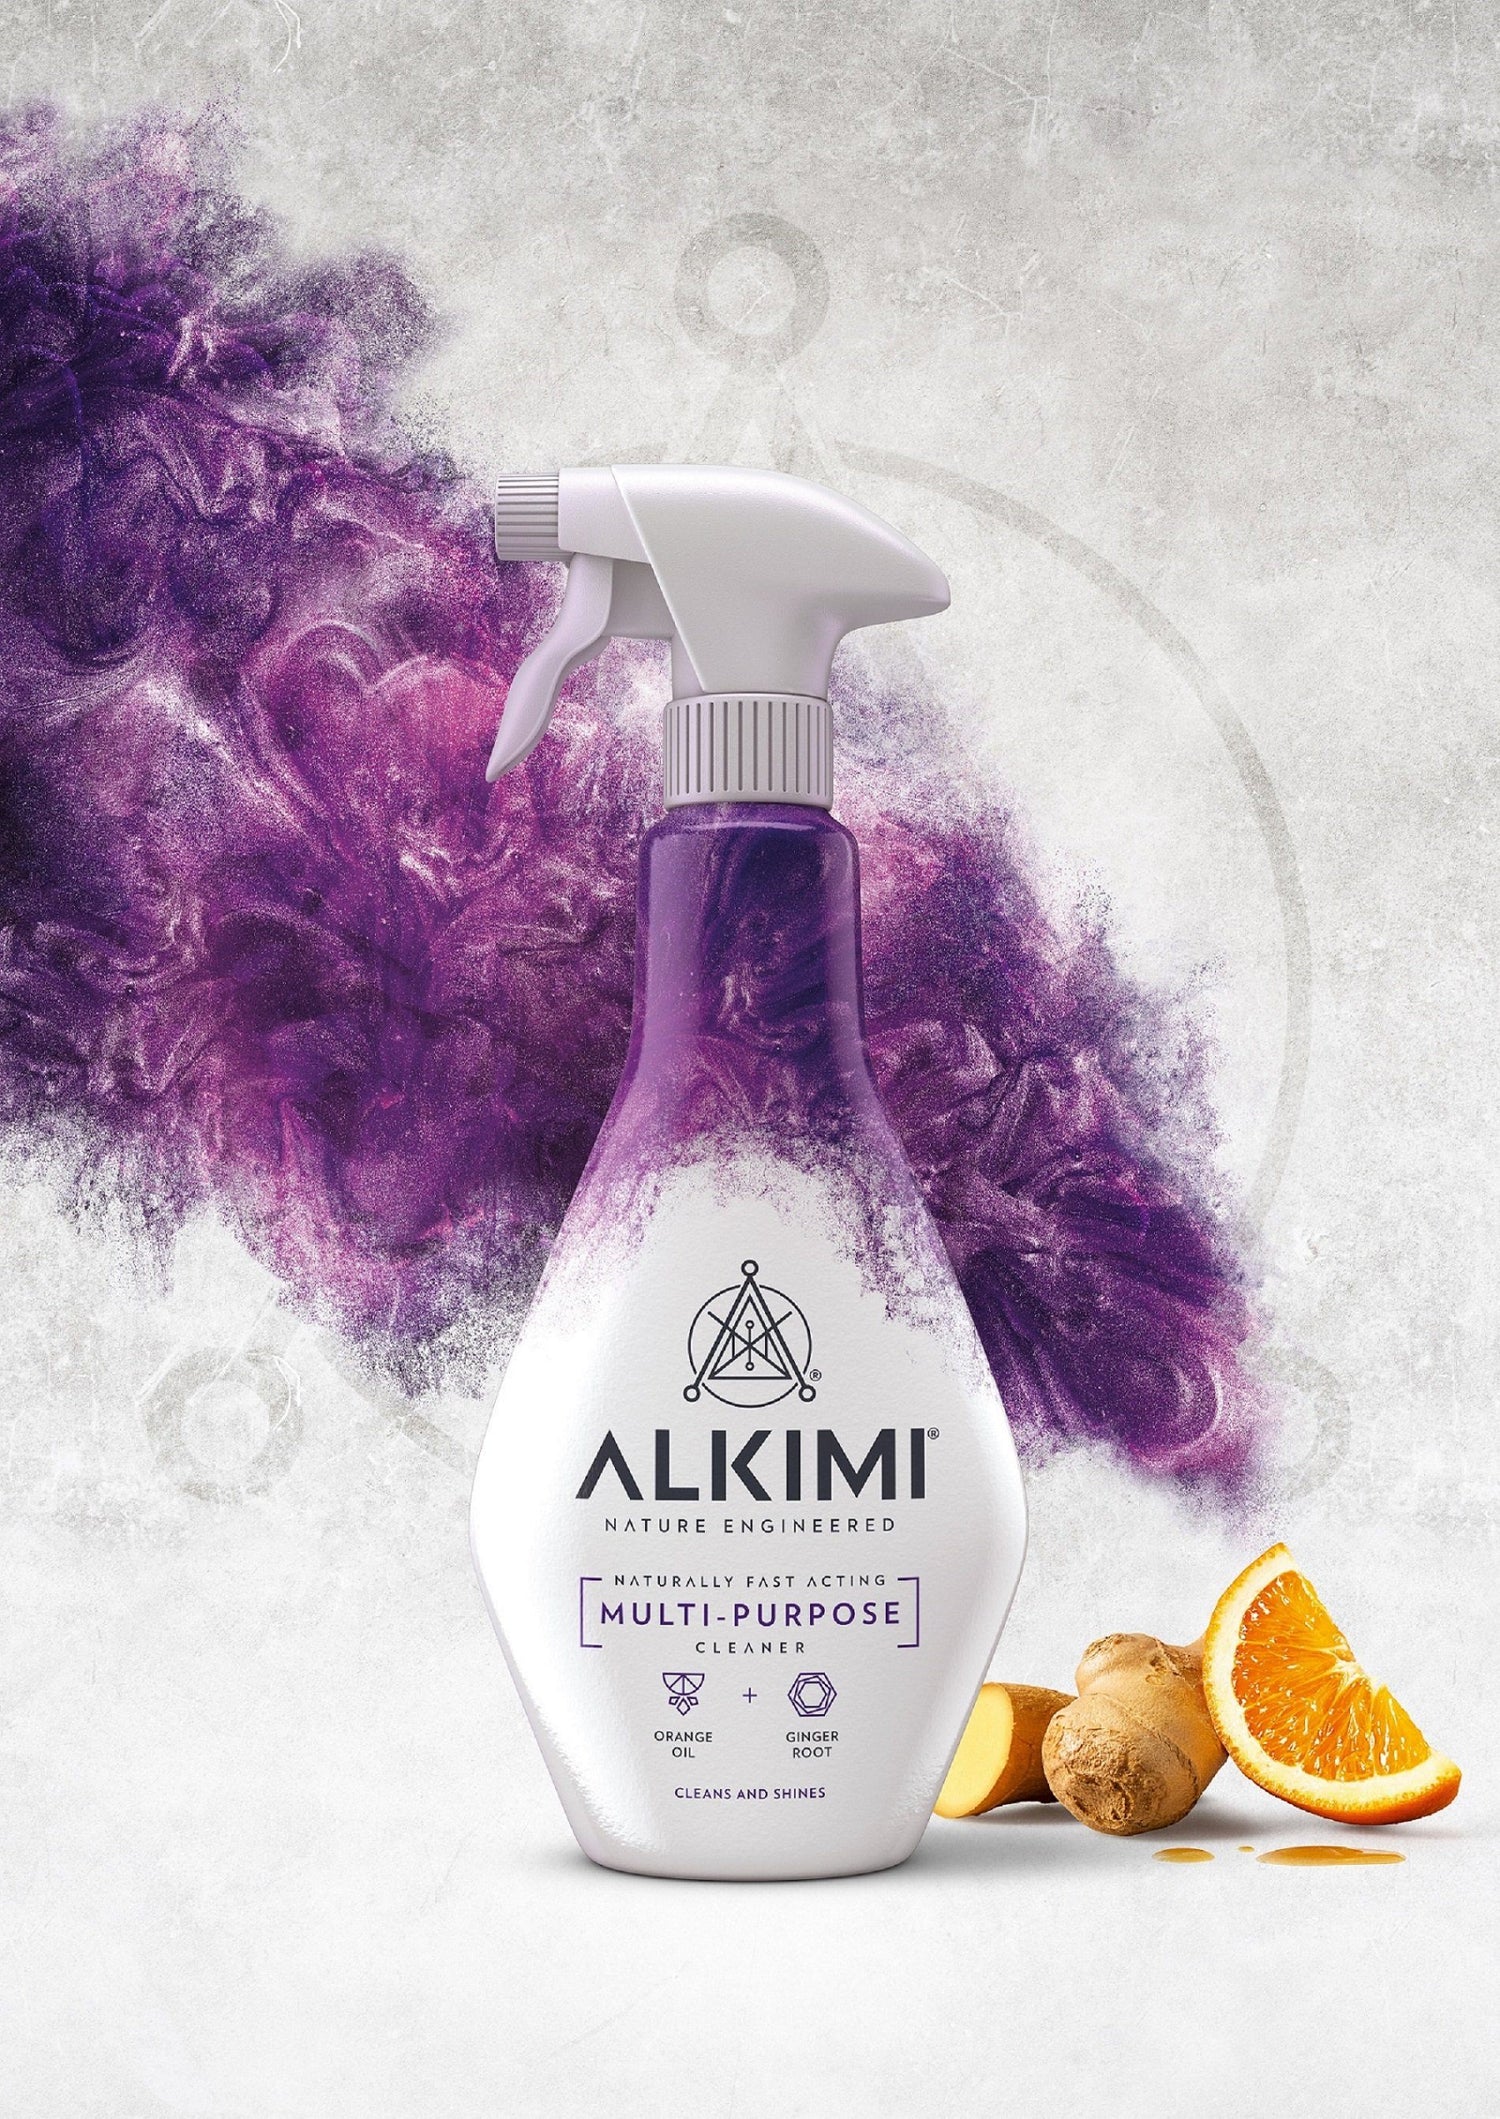 ALKIMI Multi-Purpose Cleaner 500ml - Bloom Concept